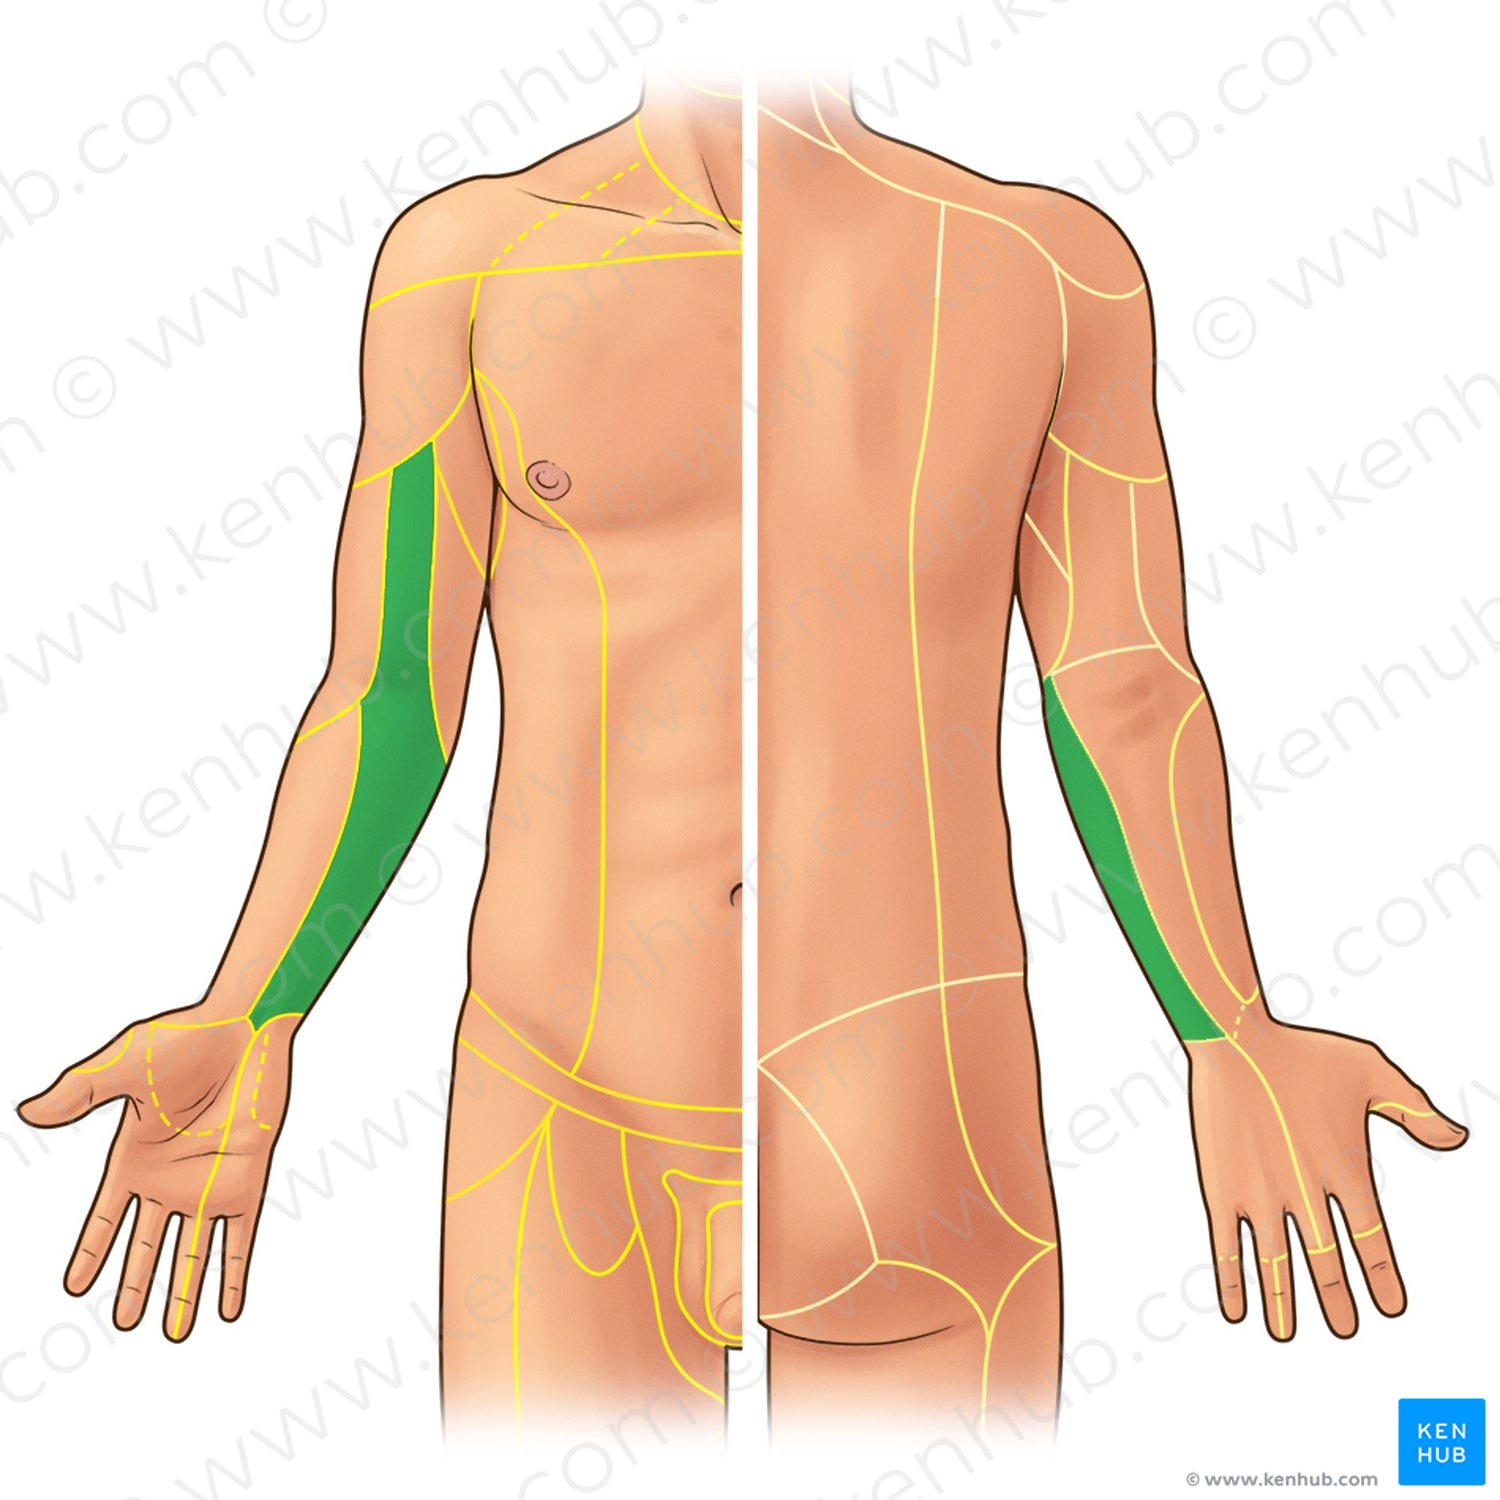 Medial antebrachial cutaneous nerve (#21913)